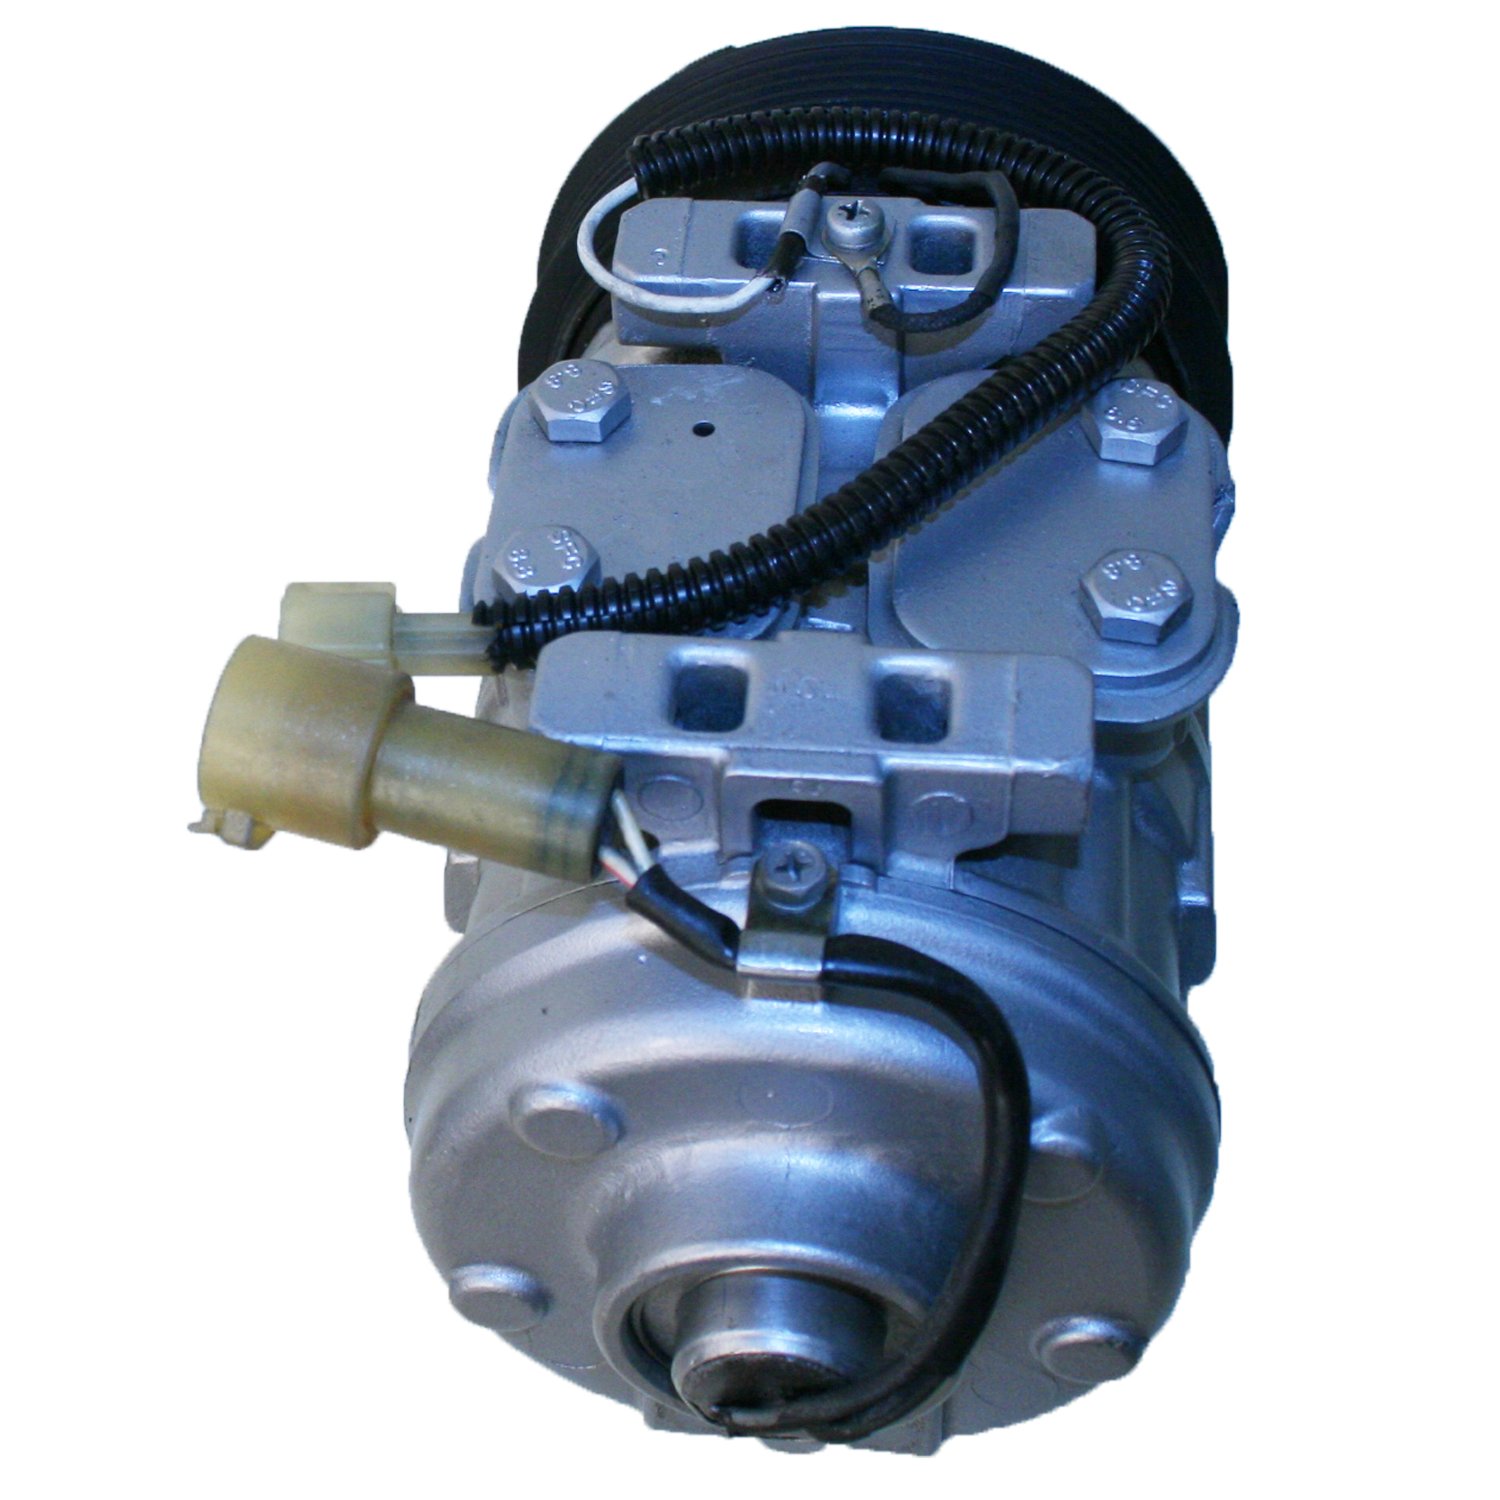 TCW Compressor 31101.502 Remanufactured Product Image field_60b6a13a6e67c